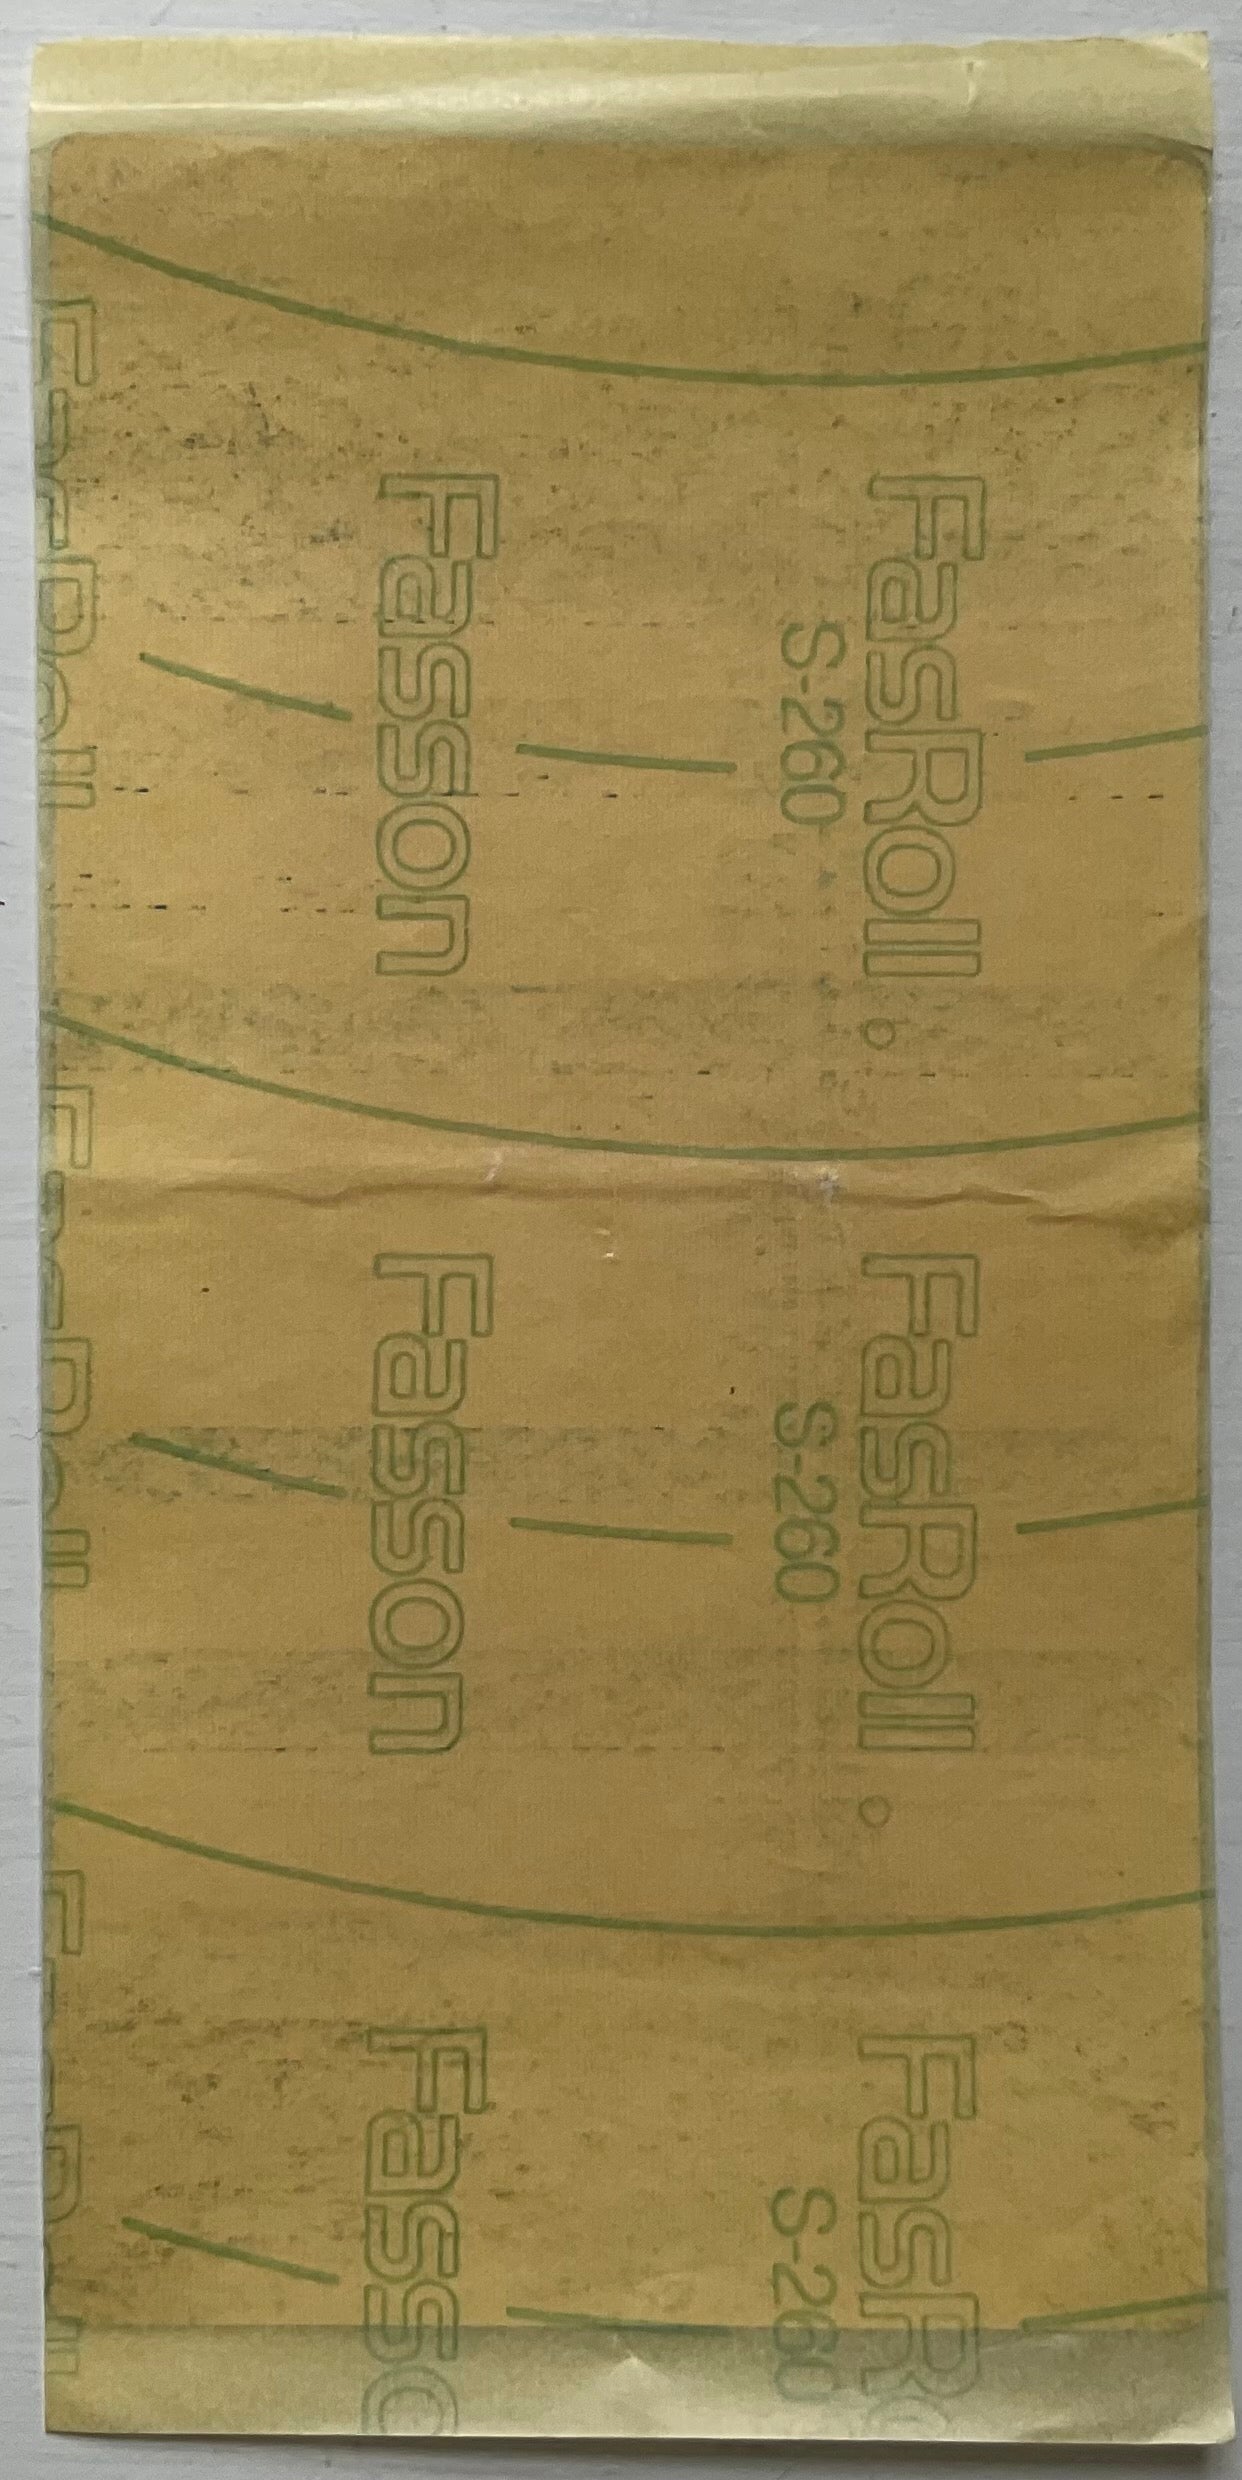 Motörhead Original Unused Backstage Pass Ticket Saga Rockteater Copenhagen 28th Mar 1987